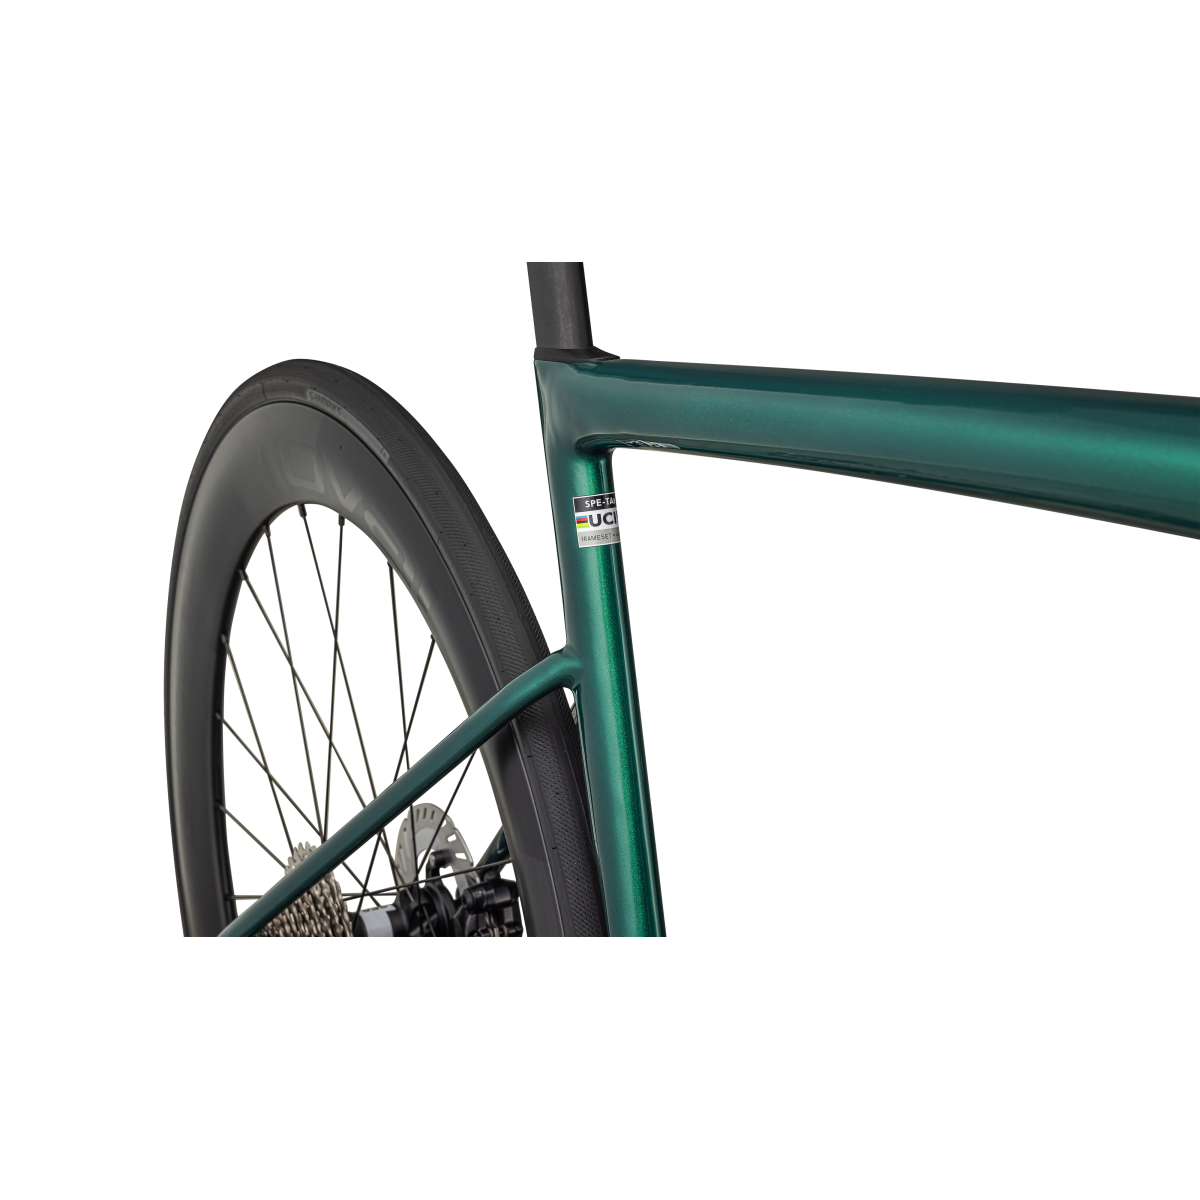 Specialized Tarmac SL8 Pro - Shimano Ultegra Di2 plento dviratis / Gloss Pine Green Metallic - White